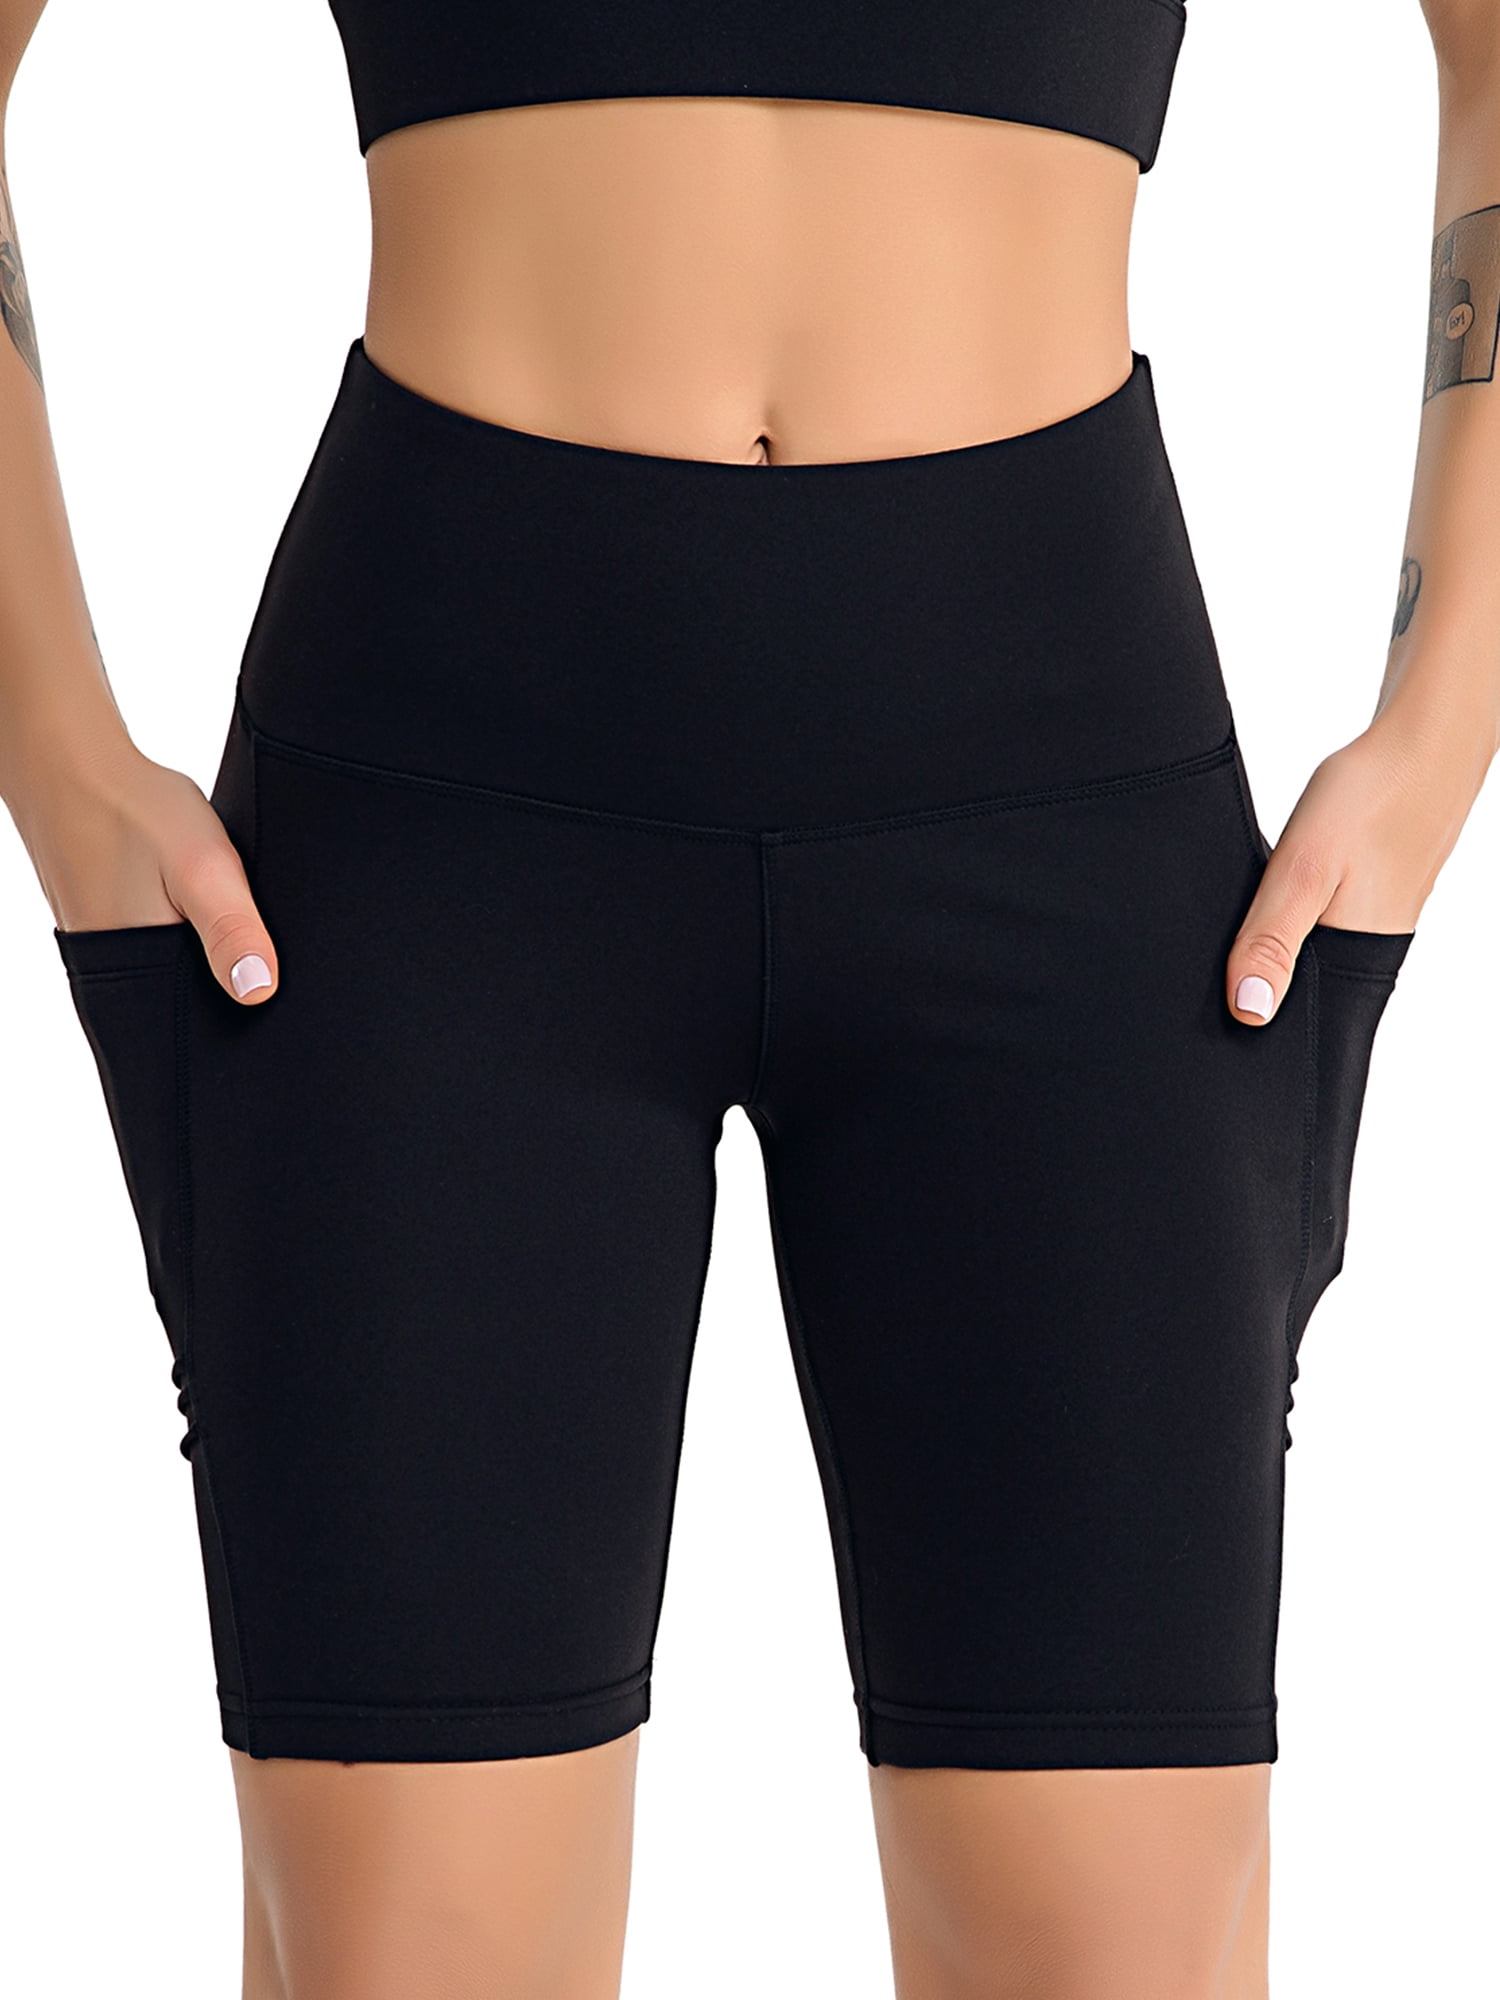 HARTPOR Womens 5 Workout Biker Shorts High Waist Tummy Control Yoga Trainning Exercise Shorts with Pockets